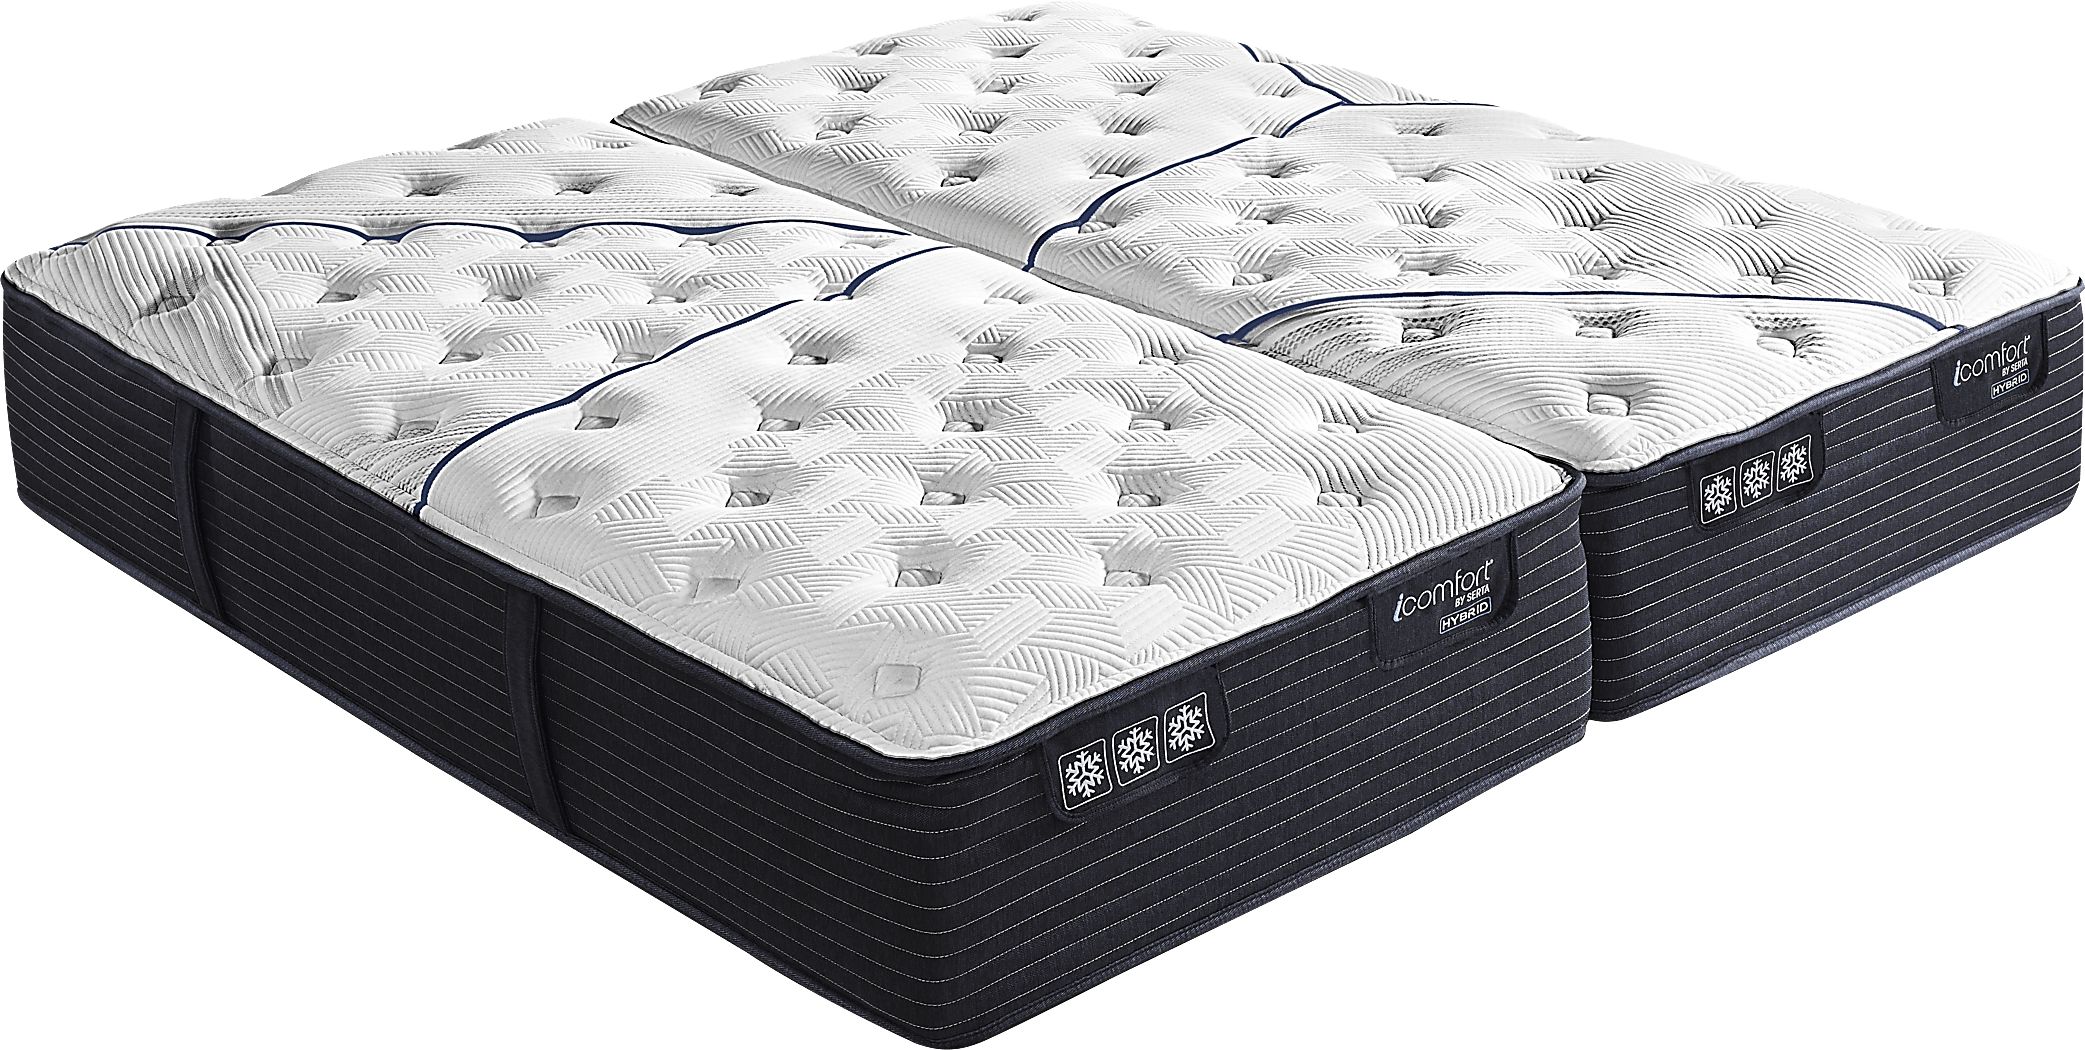 icomfort reversible 2 in 1 mattress protector reviews